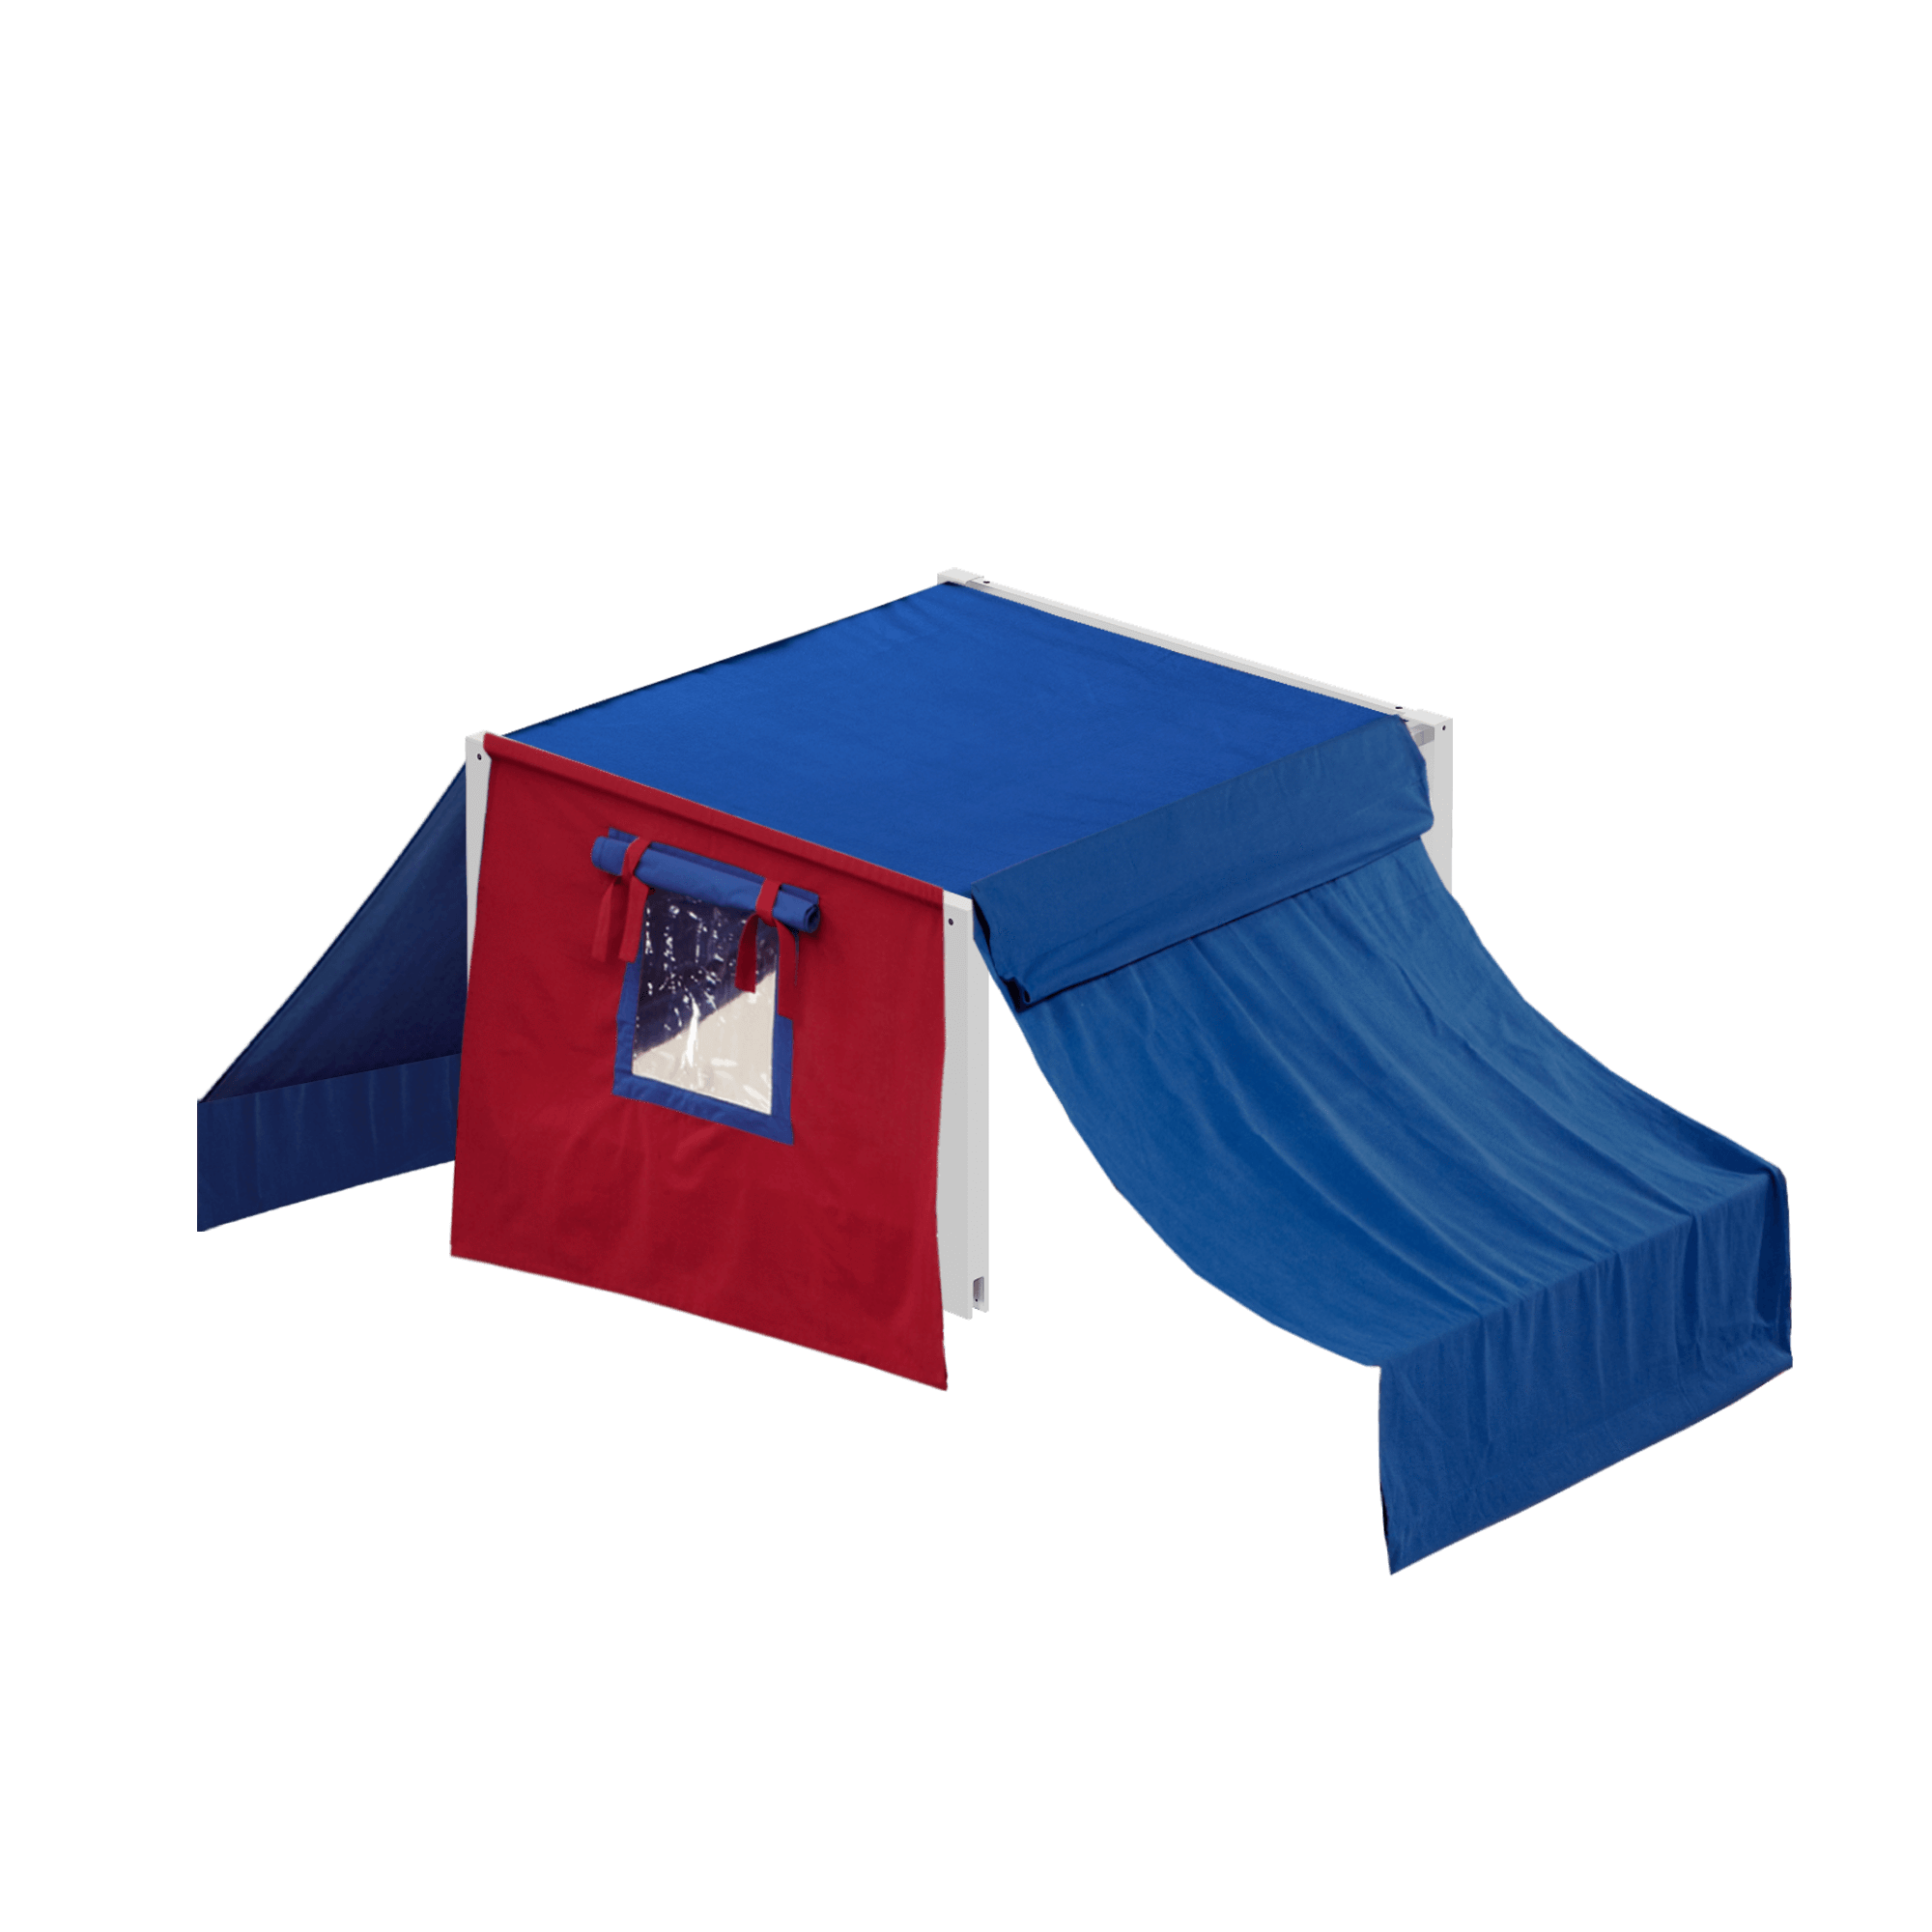 Maxtrix Twin Top Tent Frame + Fabric